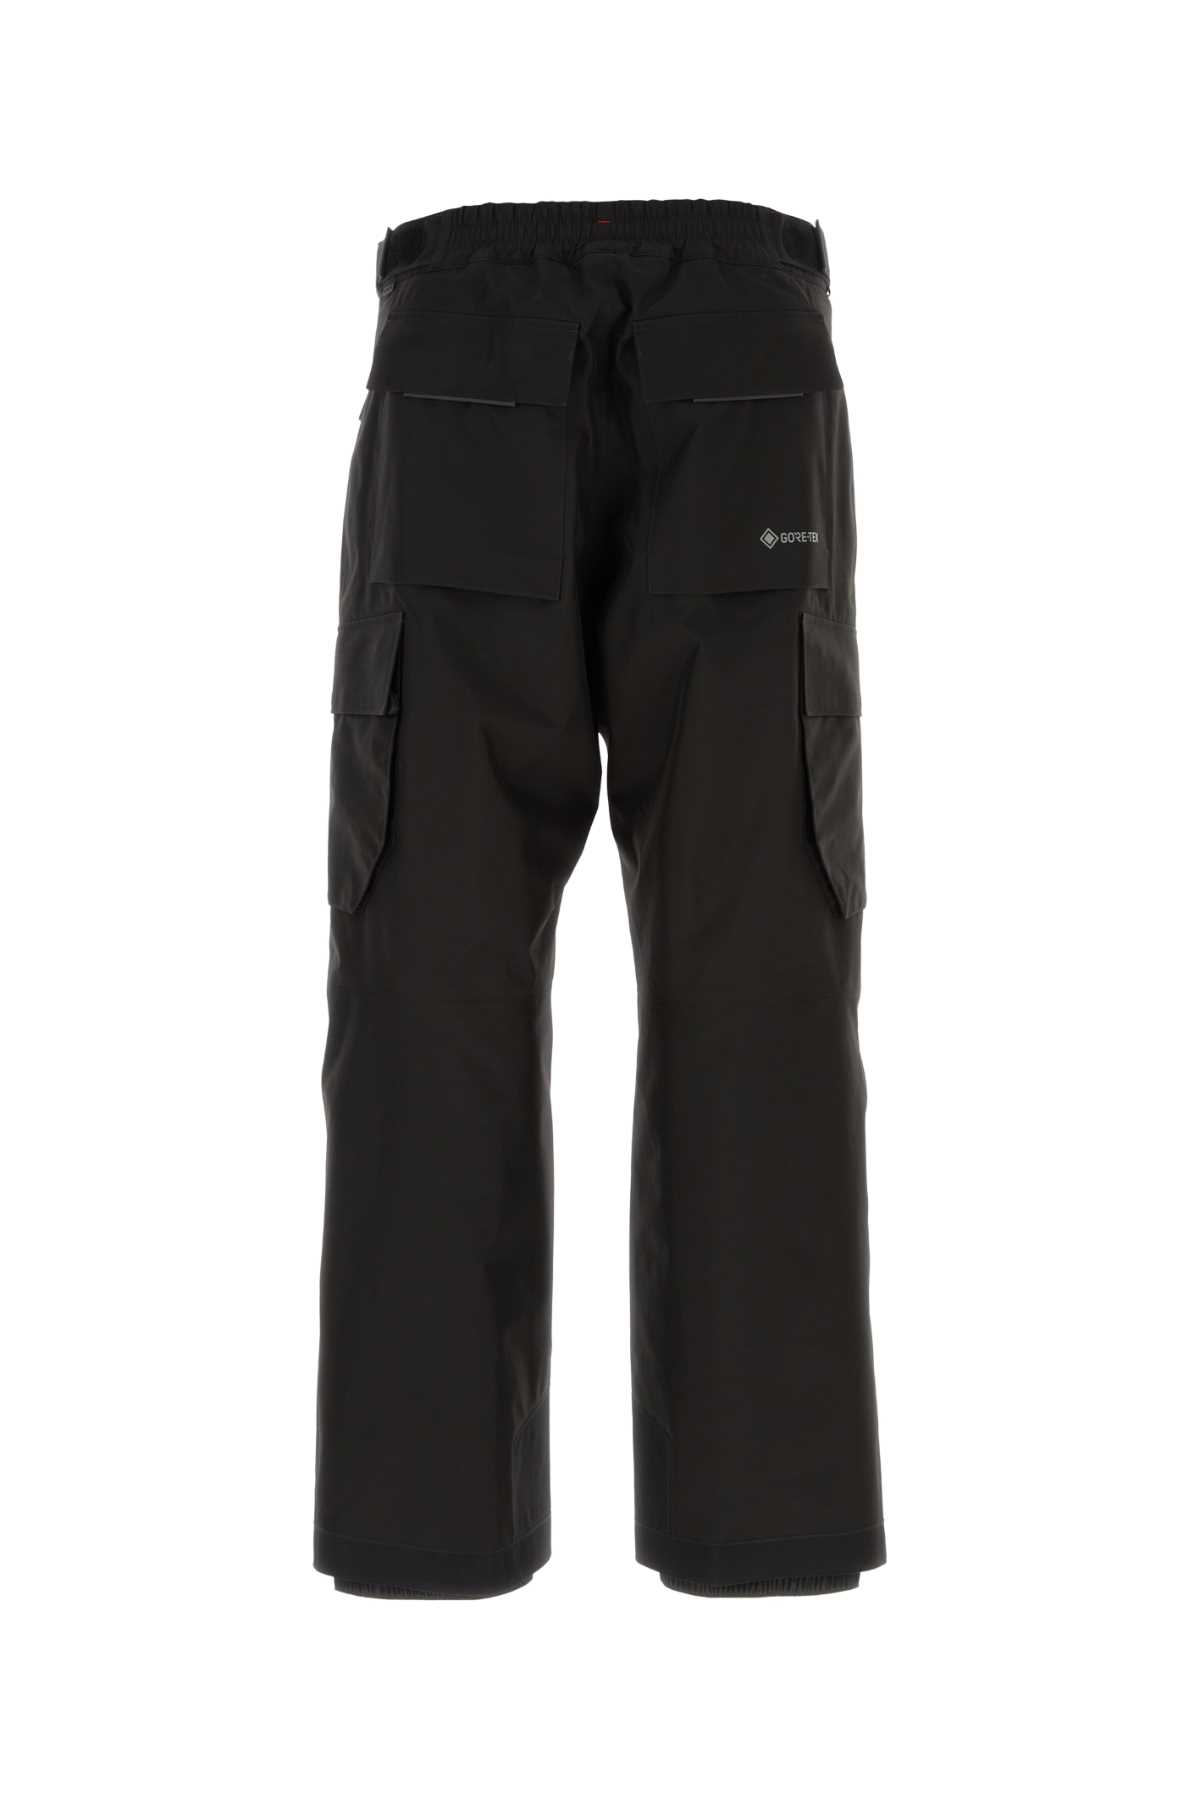 Moncler Black Polyester Ski Pant In 999